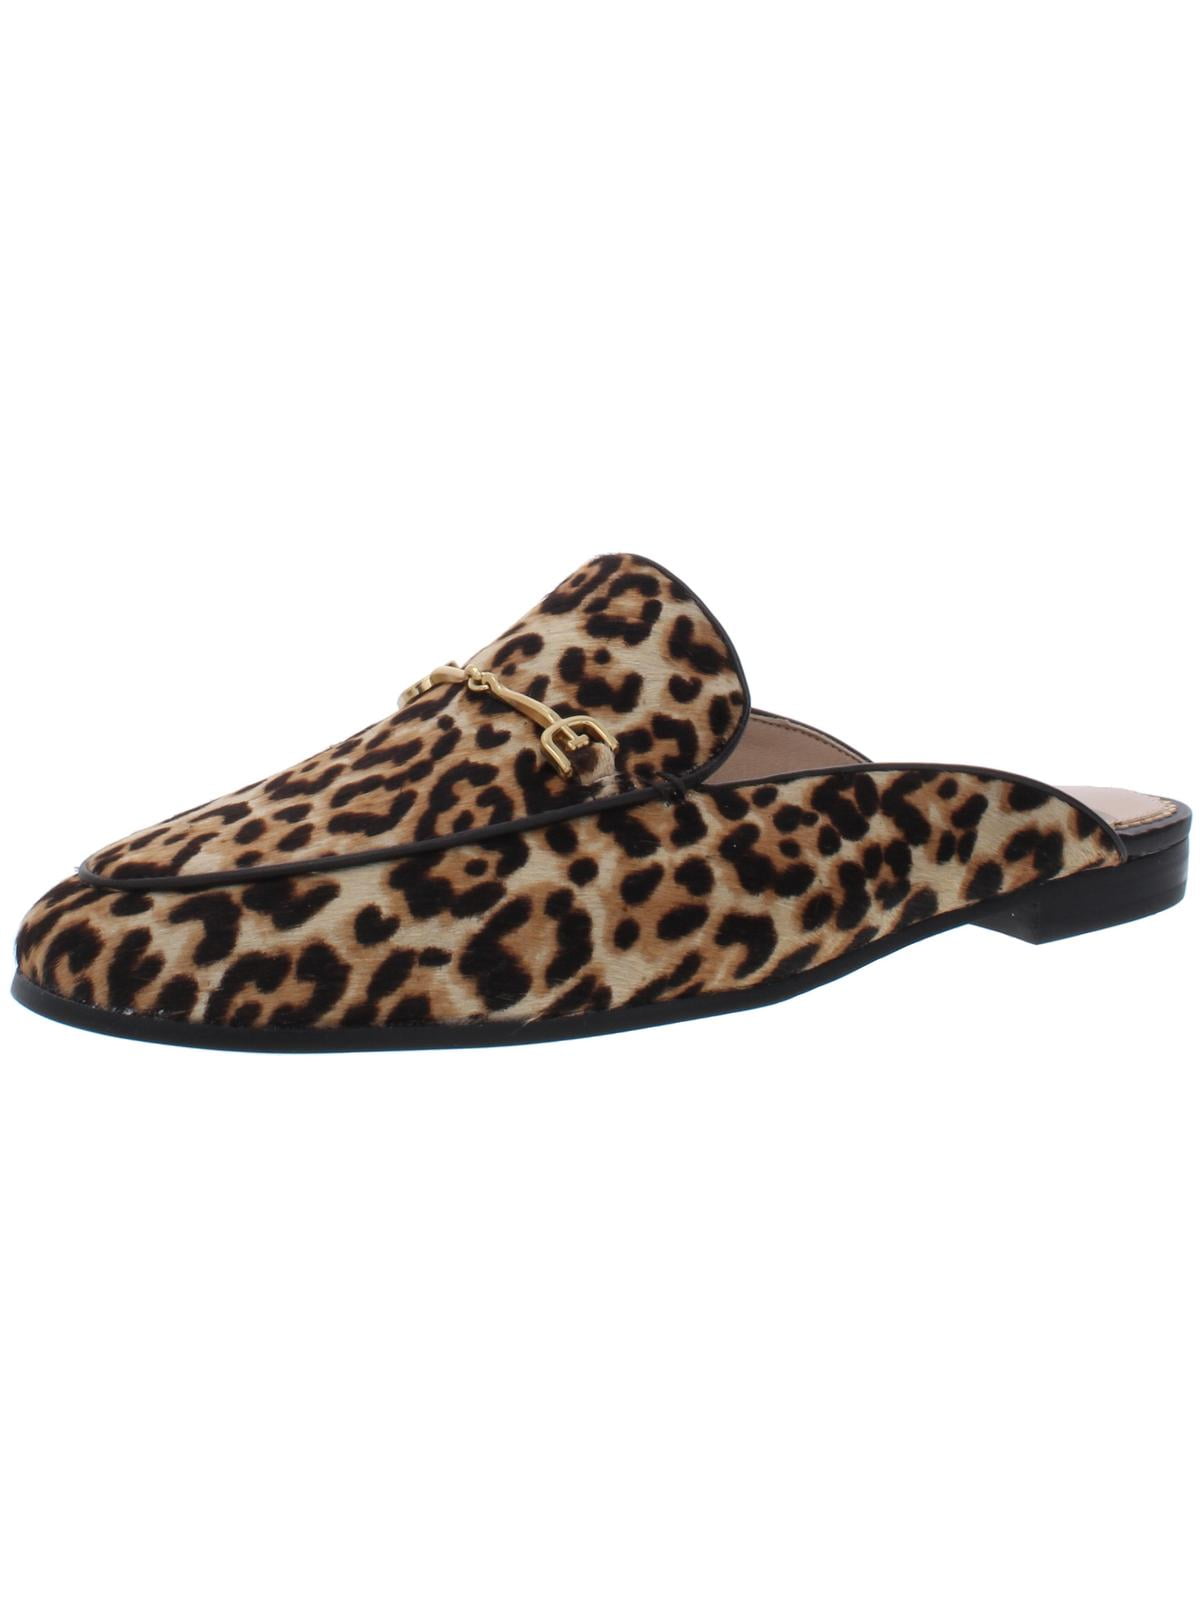 leopard mules womens shoes